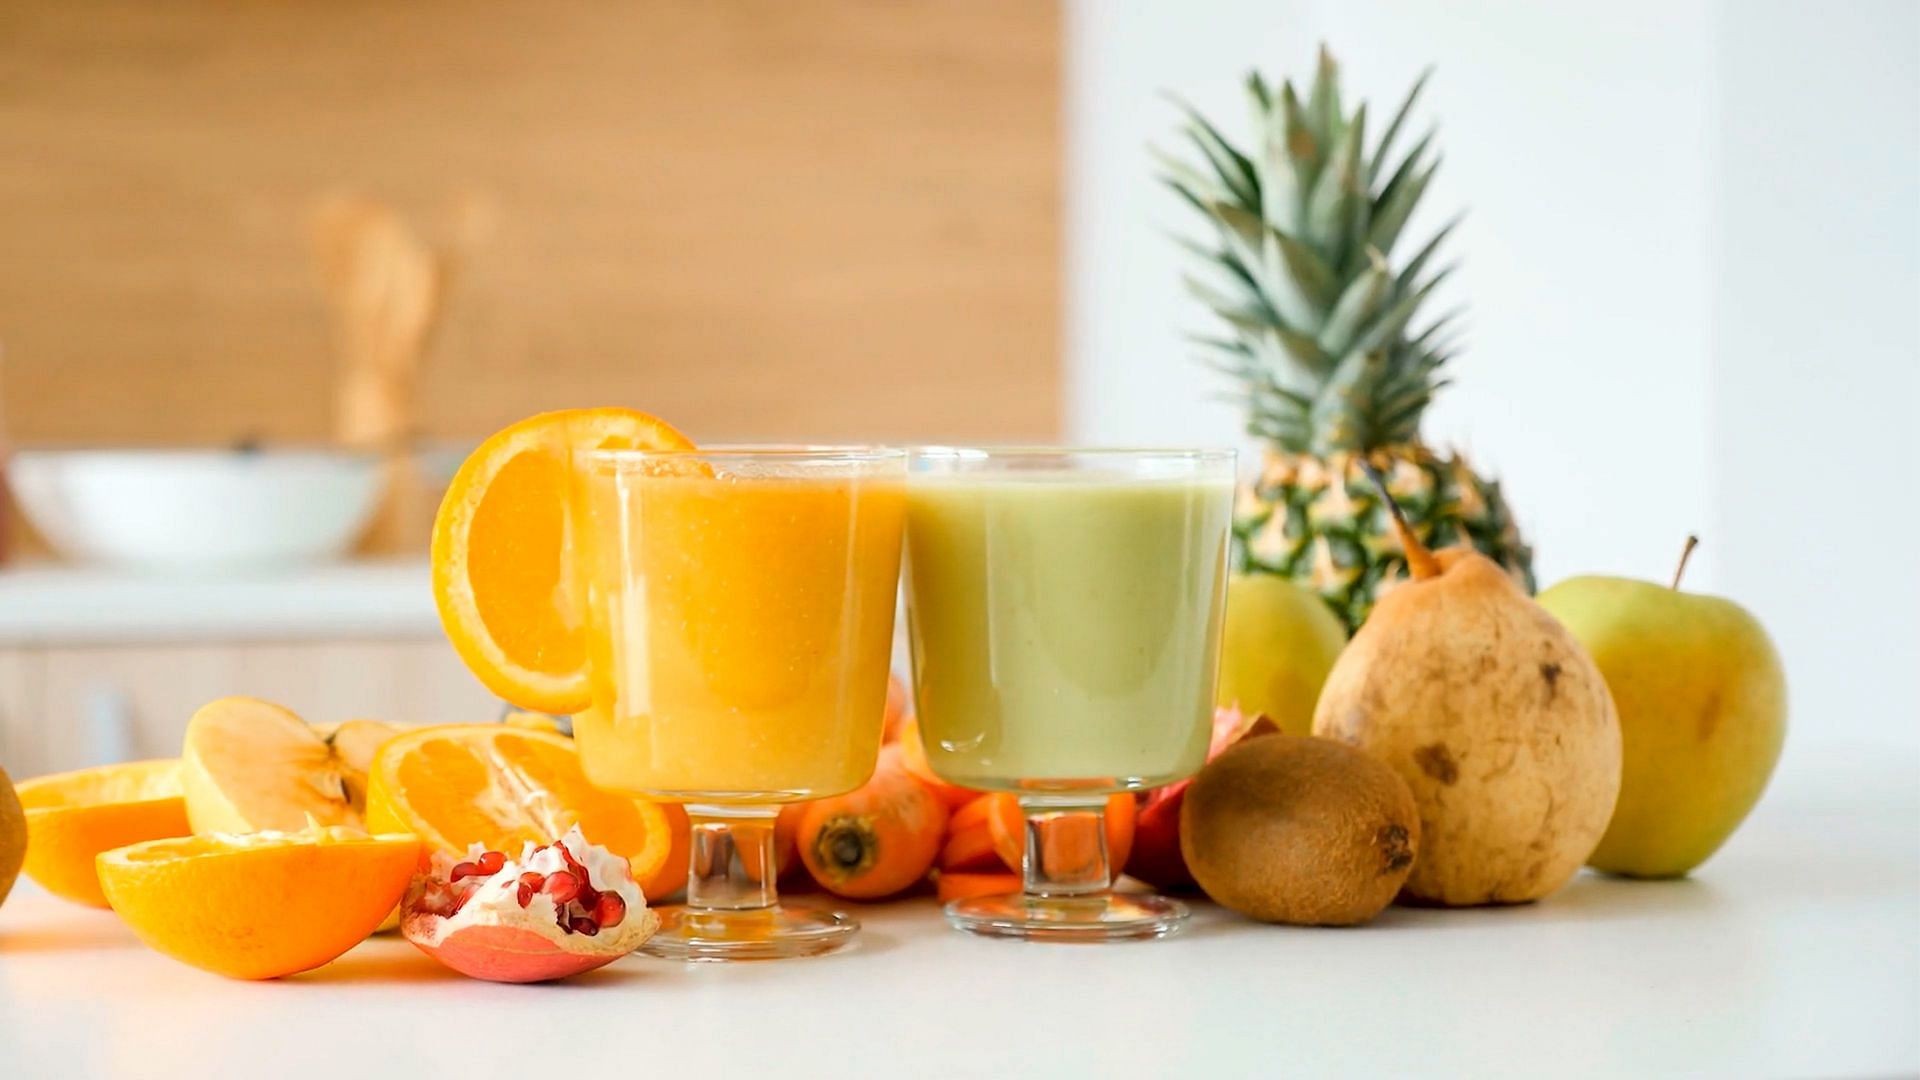 Squeezed Juice Cleanse Plan can improve digestion (Image via Unsplash/Jugoslocos)